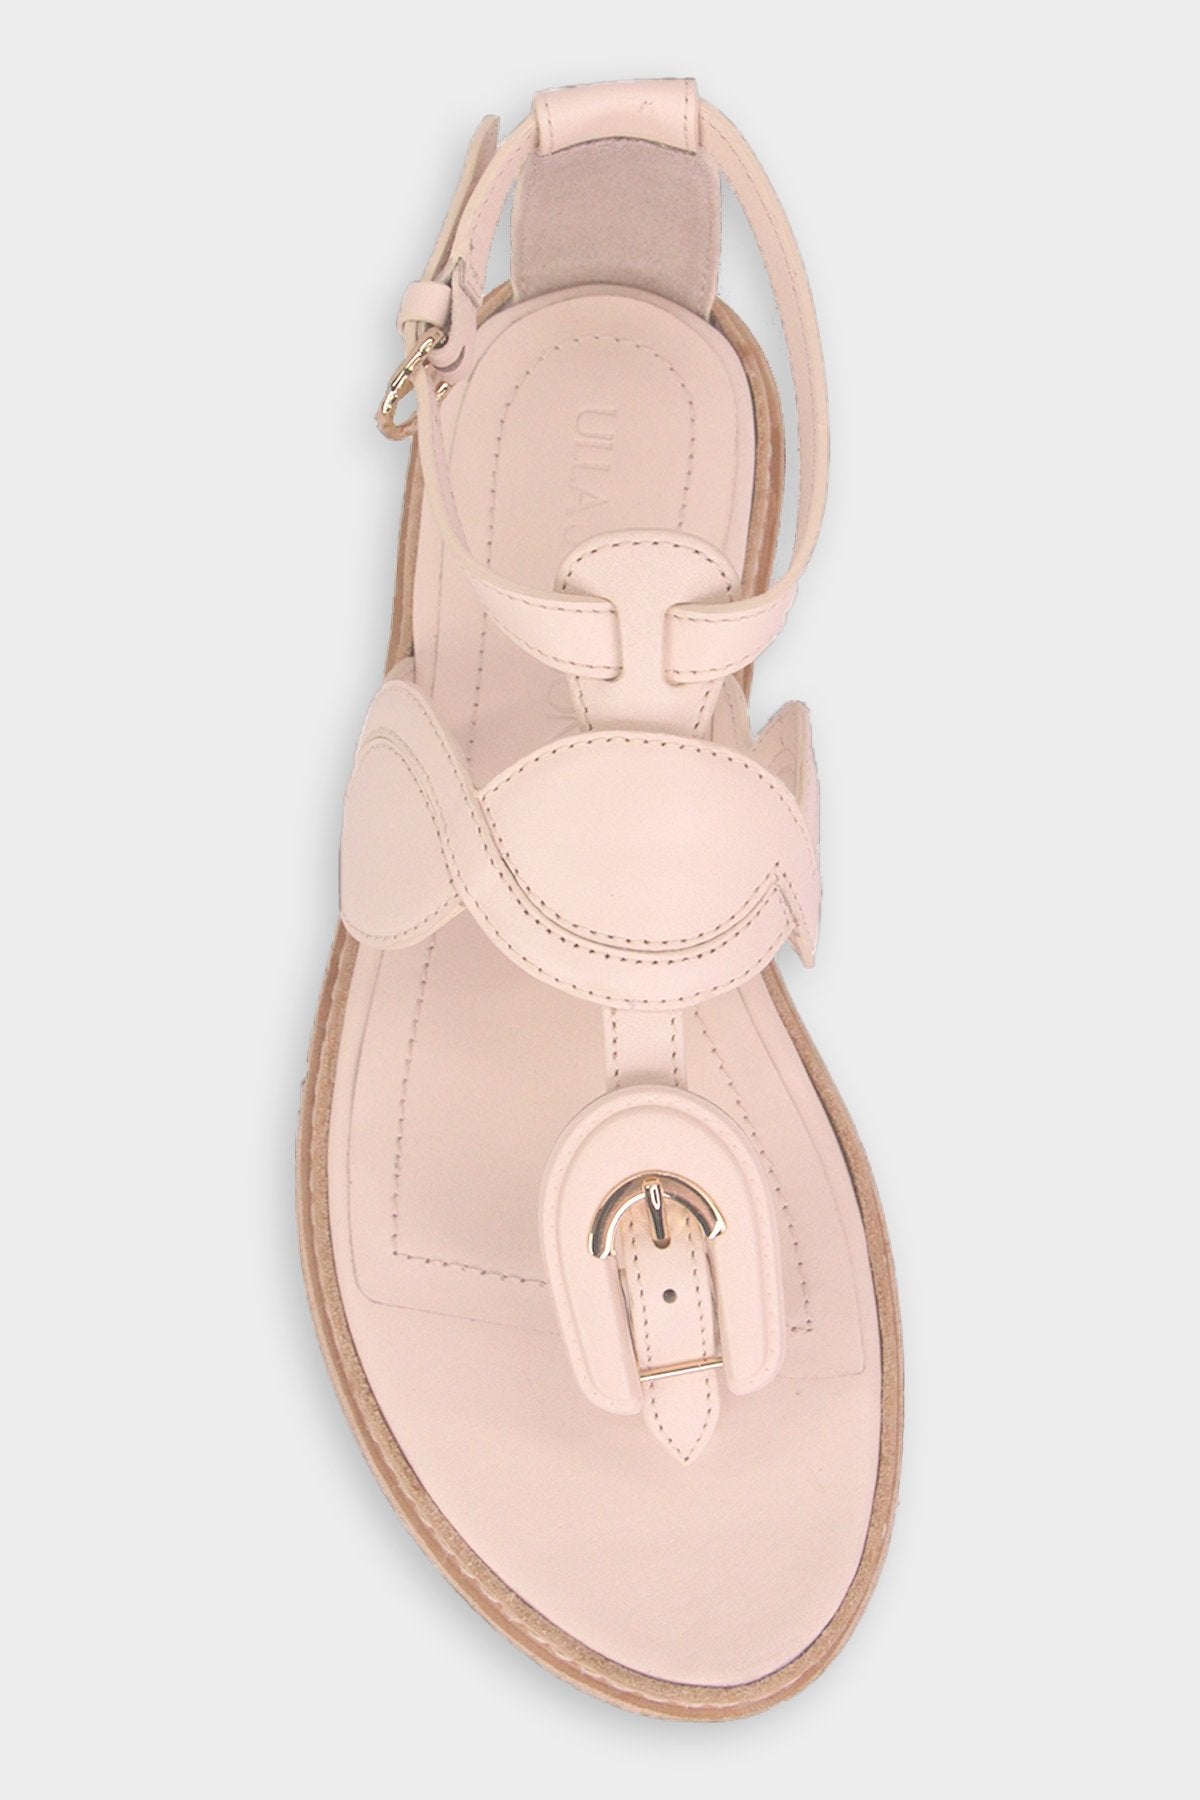 Arabella Braided Leather Sandal in Pearled Ivory - shop-olivia.com